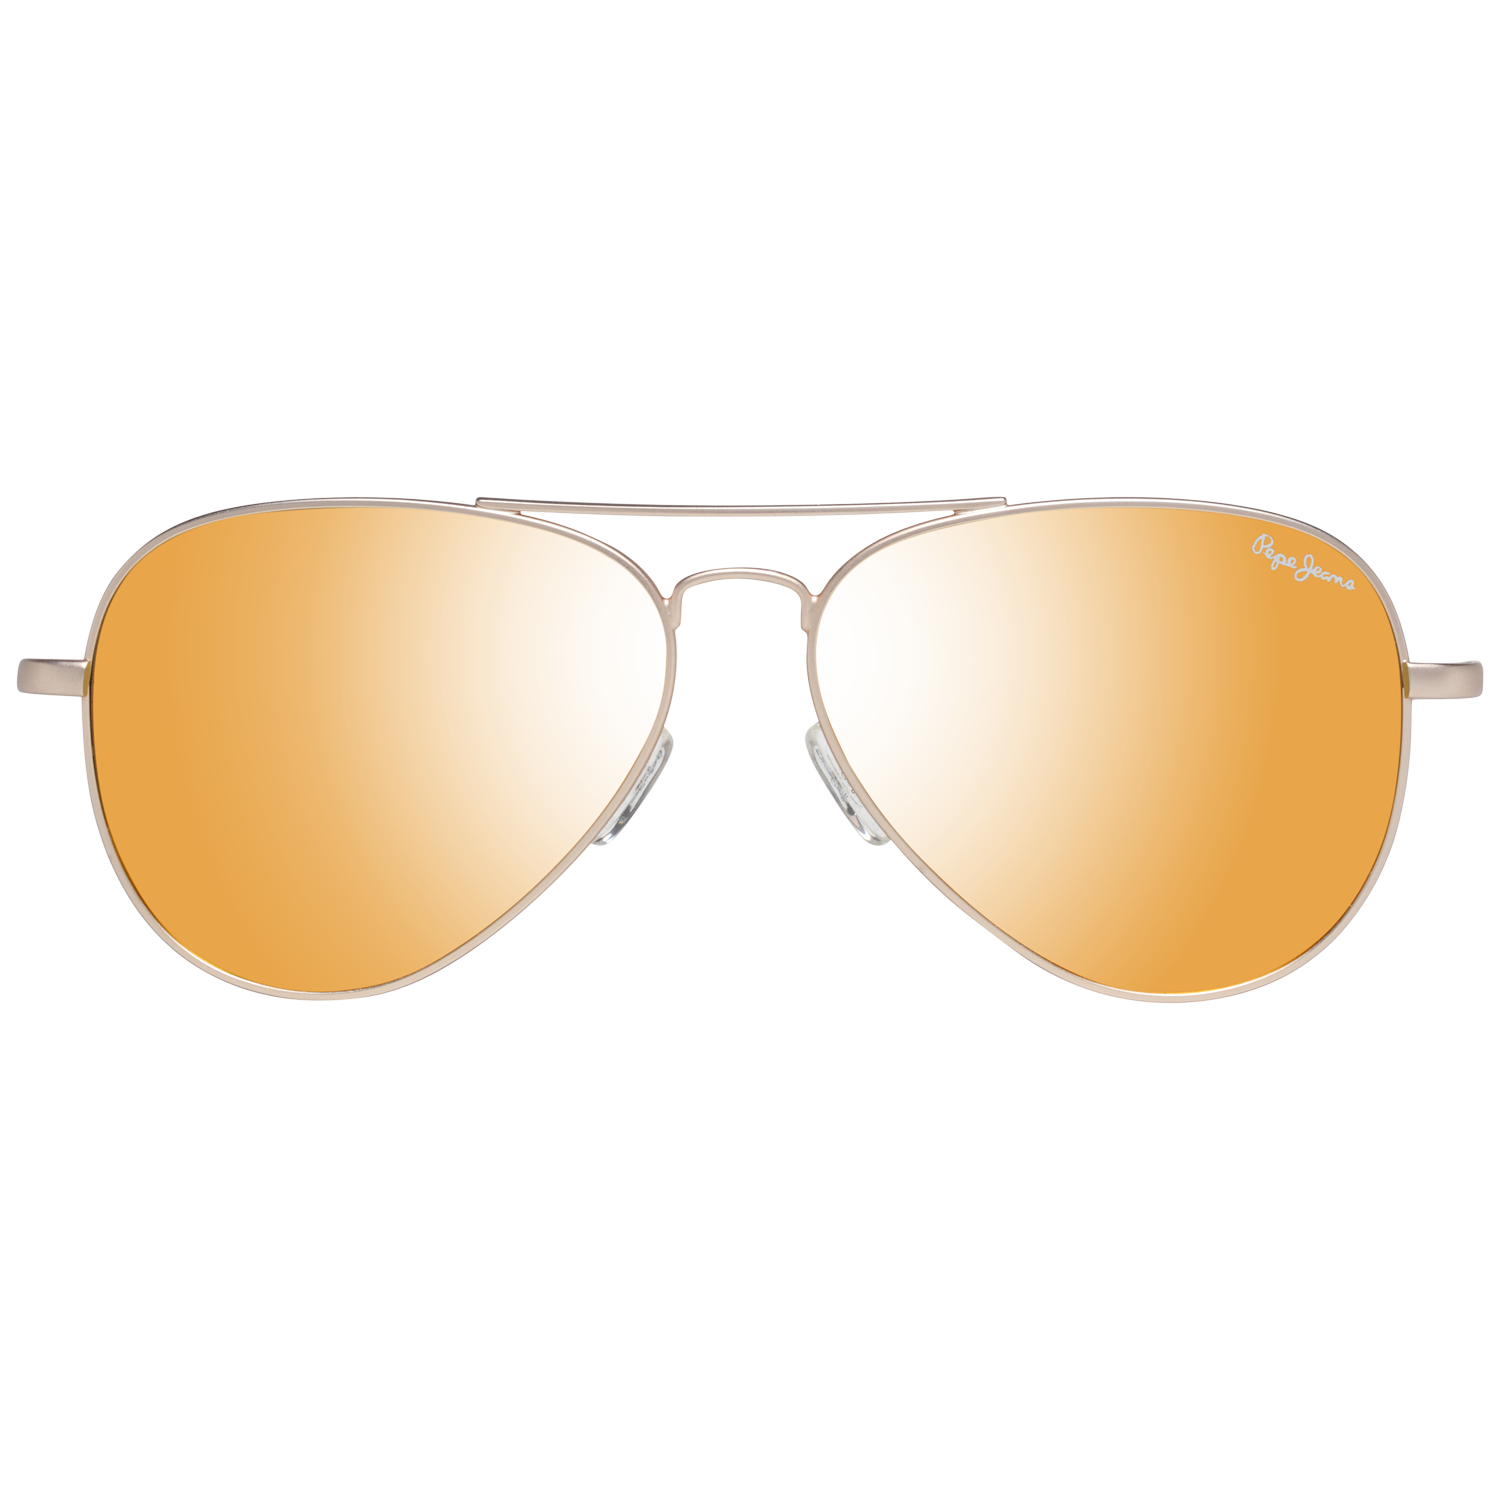 Pepe Jeans Sunglasses Pepe Jeans Sunglasses PJ5125 C2 58 Eyeglasses Eyewear UK USA Australia 